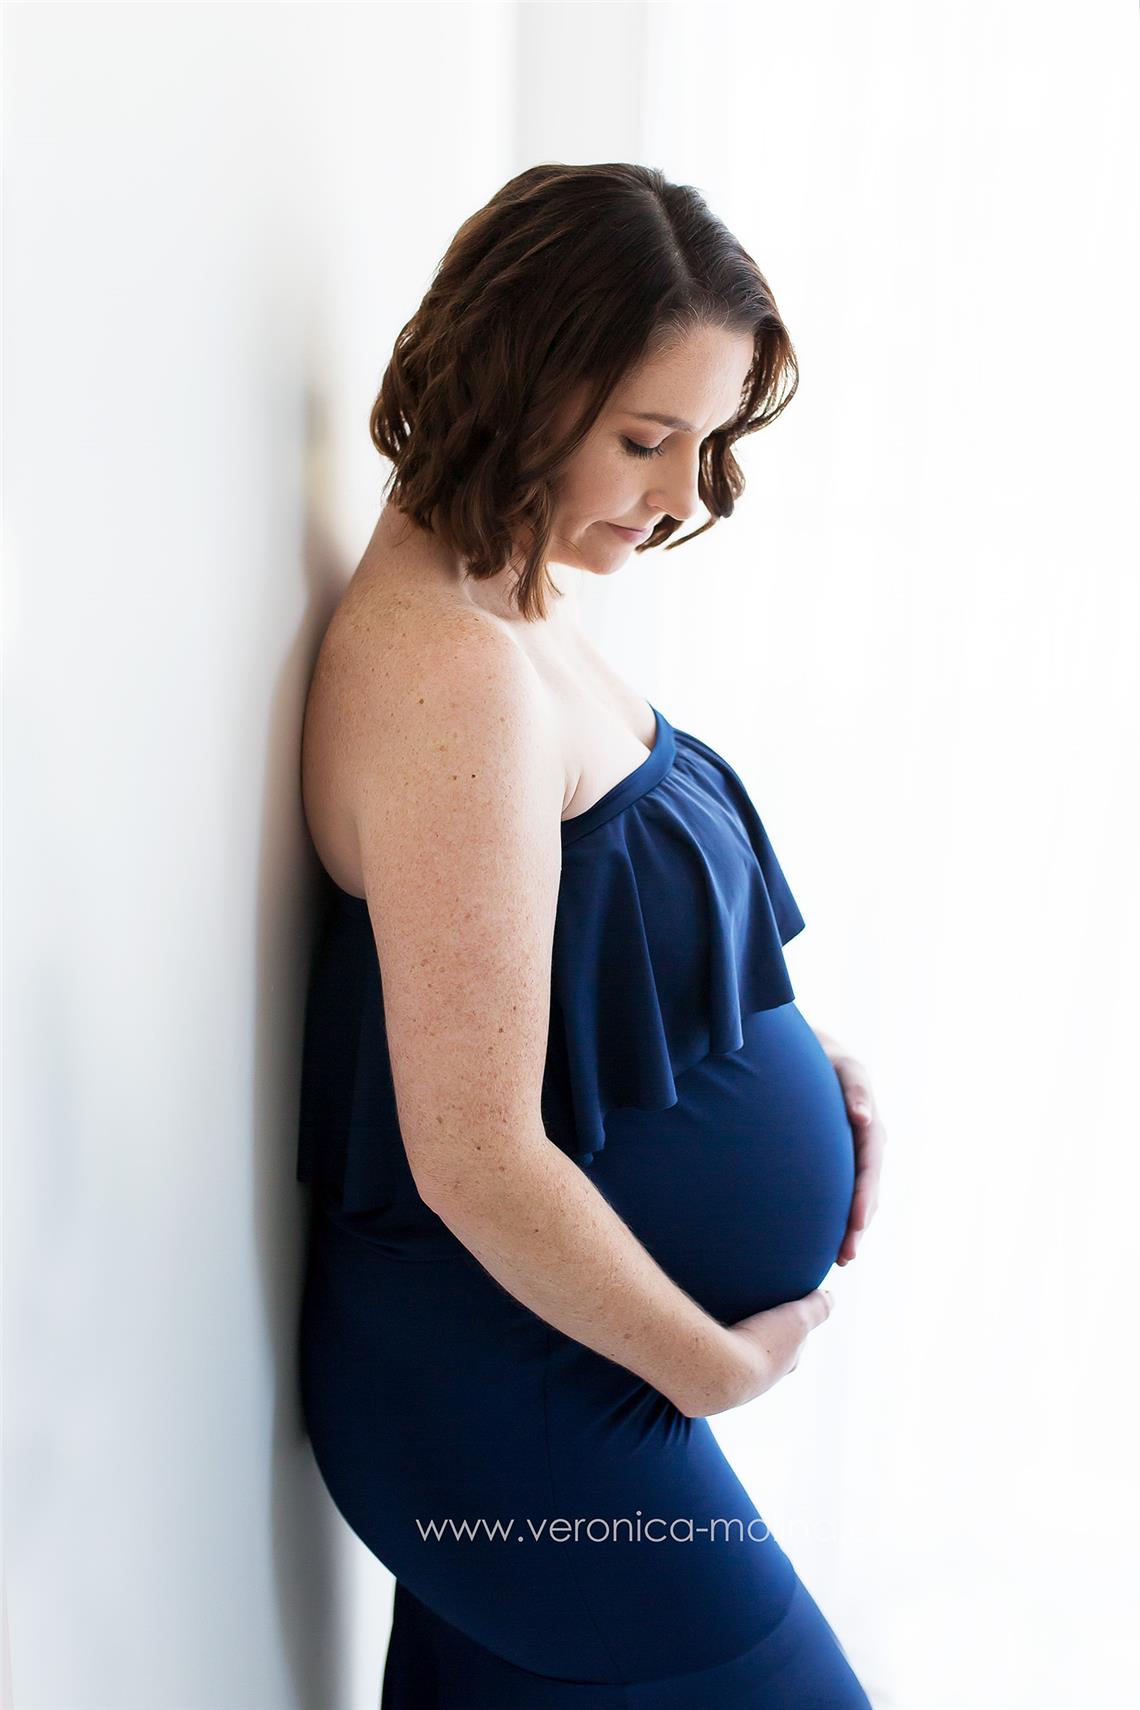 Maternity and newborn photography Brisbane Southside - Photo 5